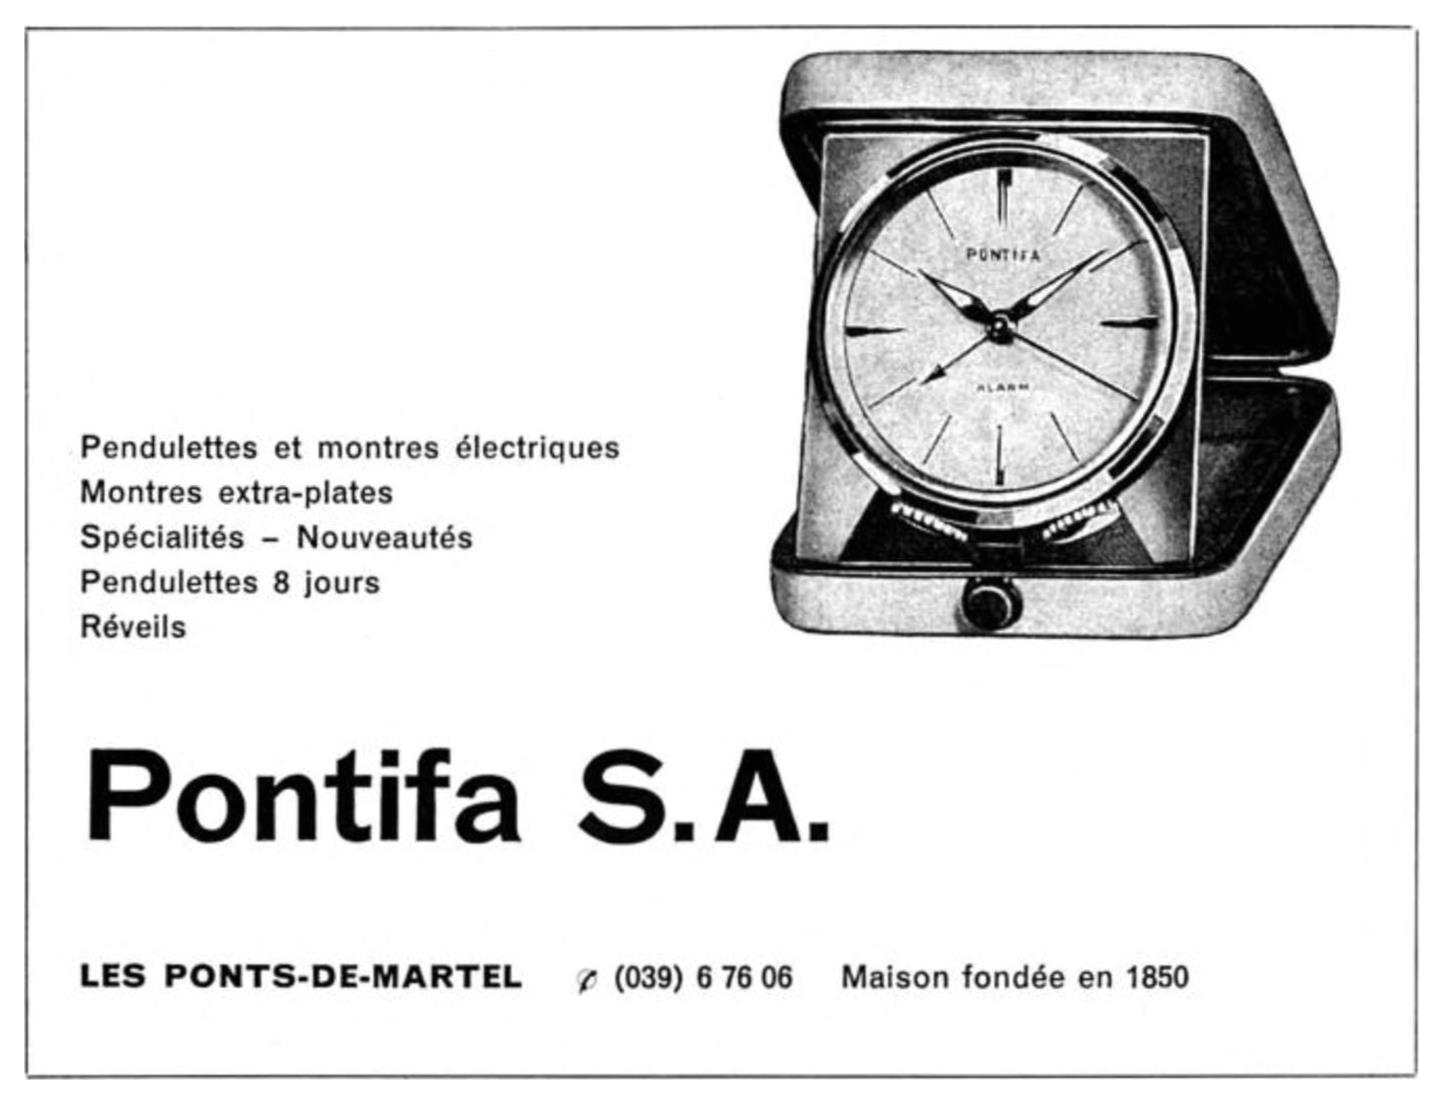 Pontifa 1969 0.jpg